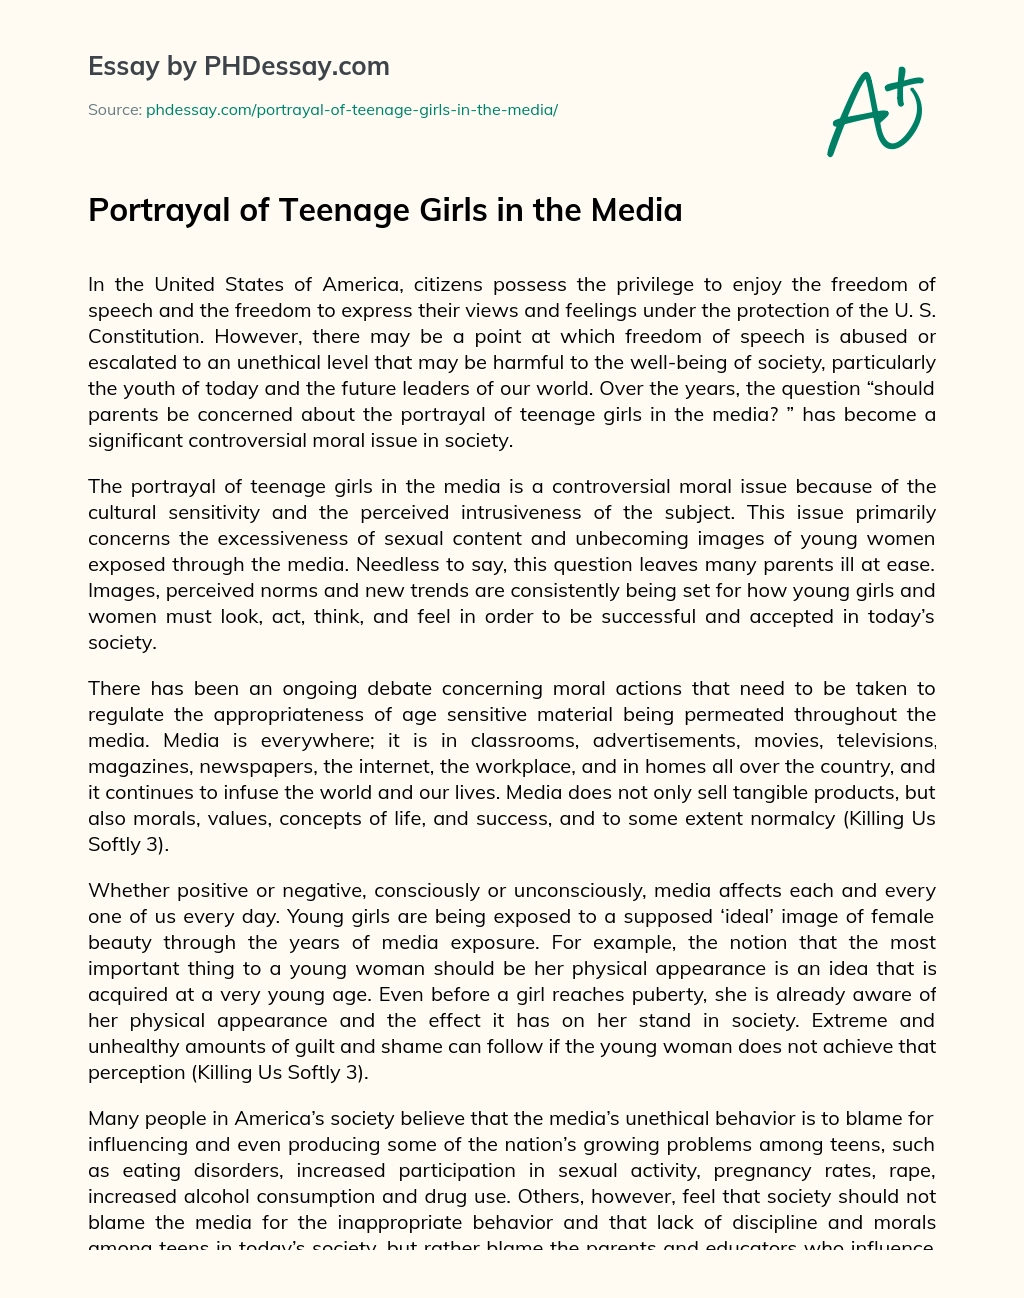 Portrayal of Teenage Girls in the Media essay